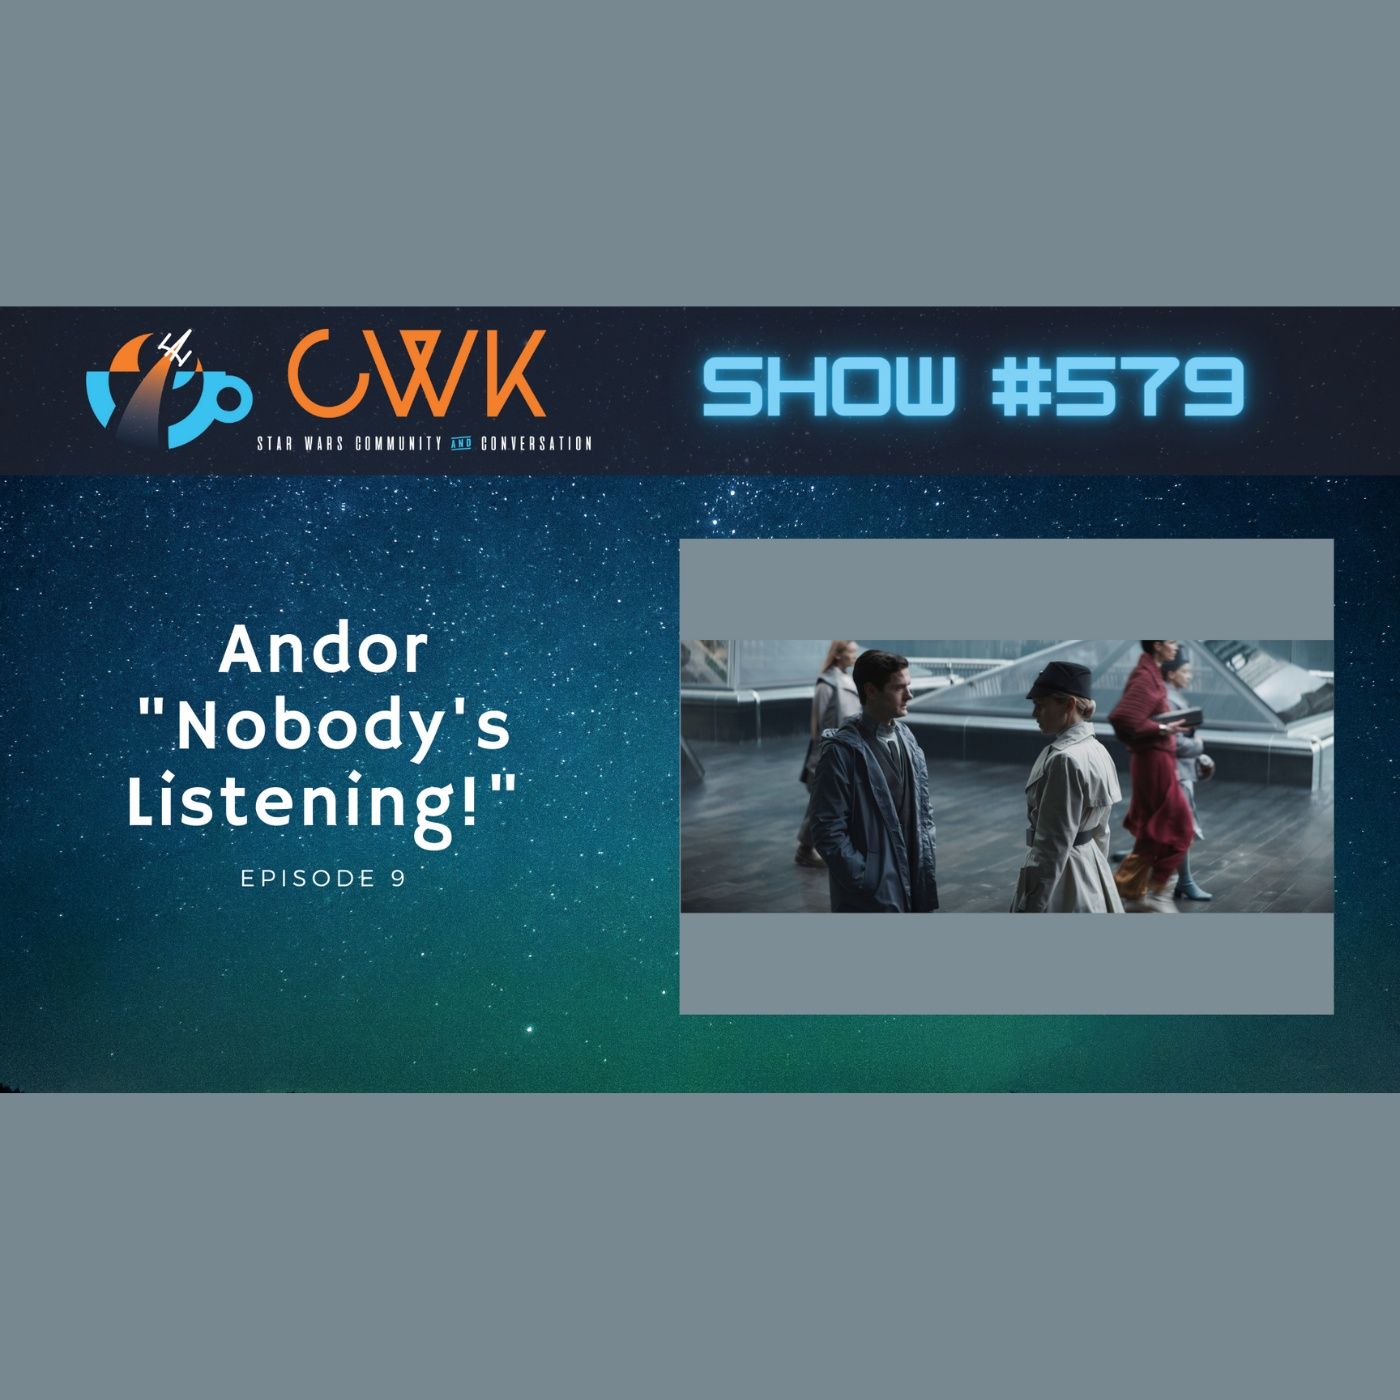 CWK Show #579: Andor- ”Nobody’s Listening!”